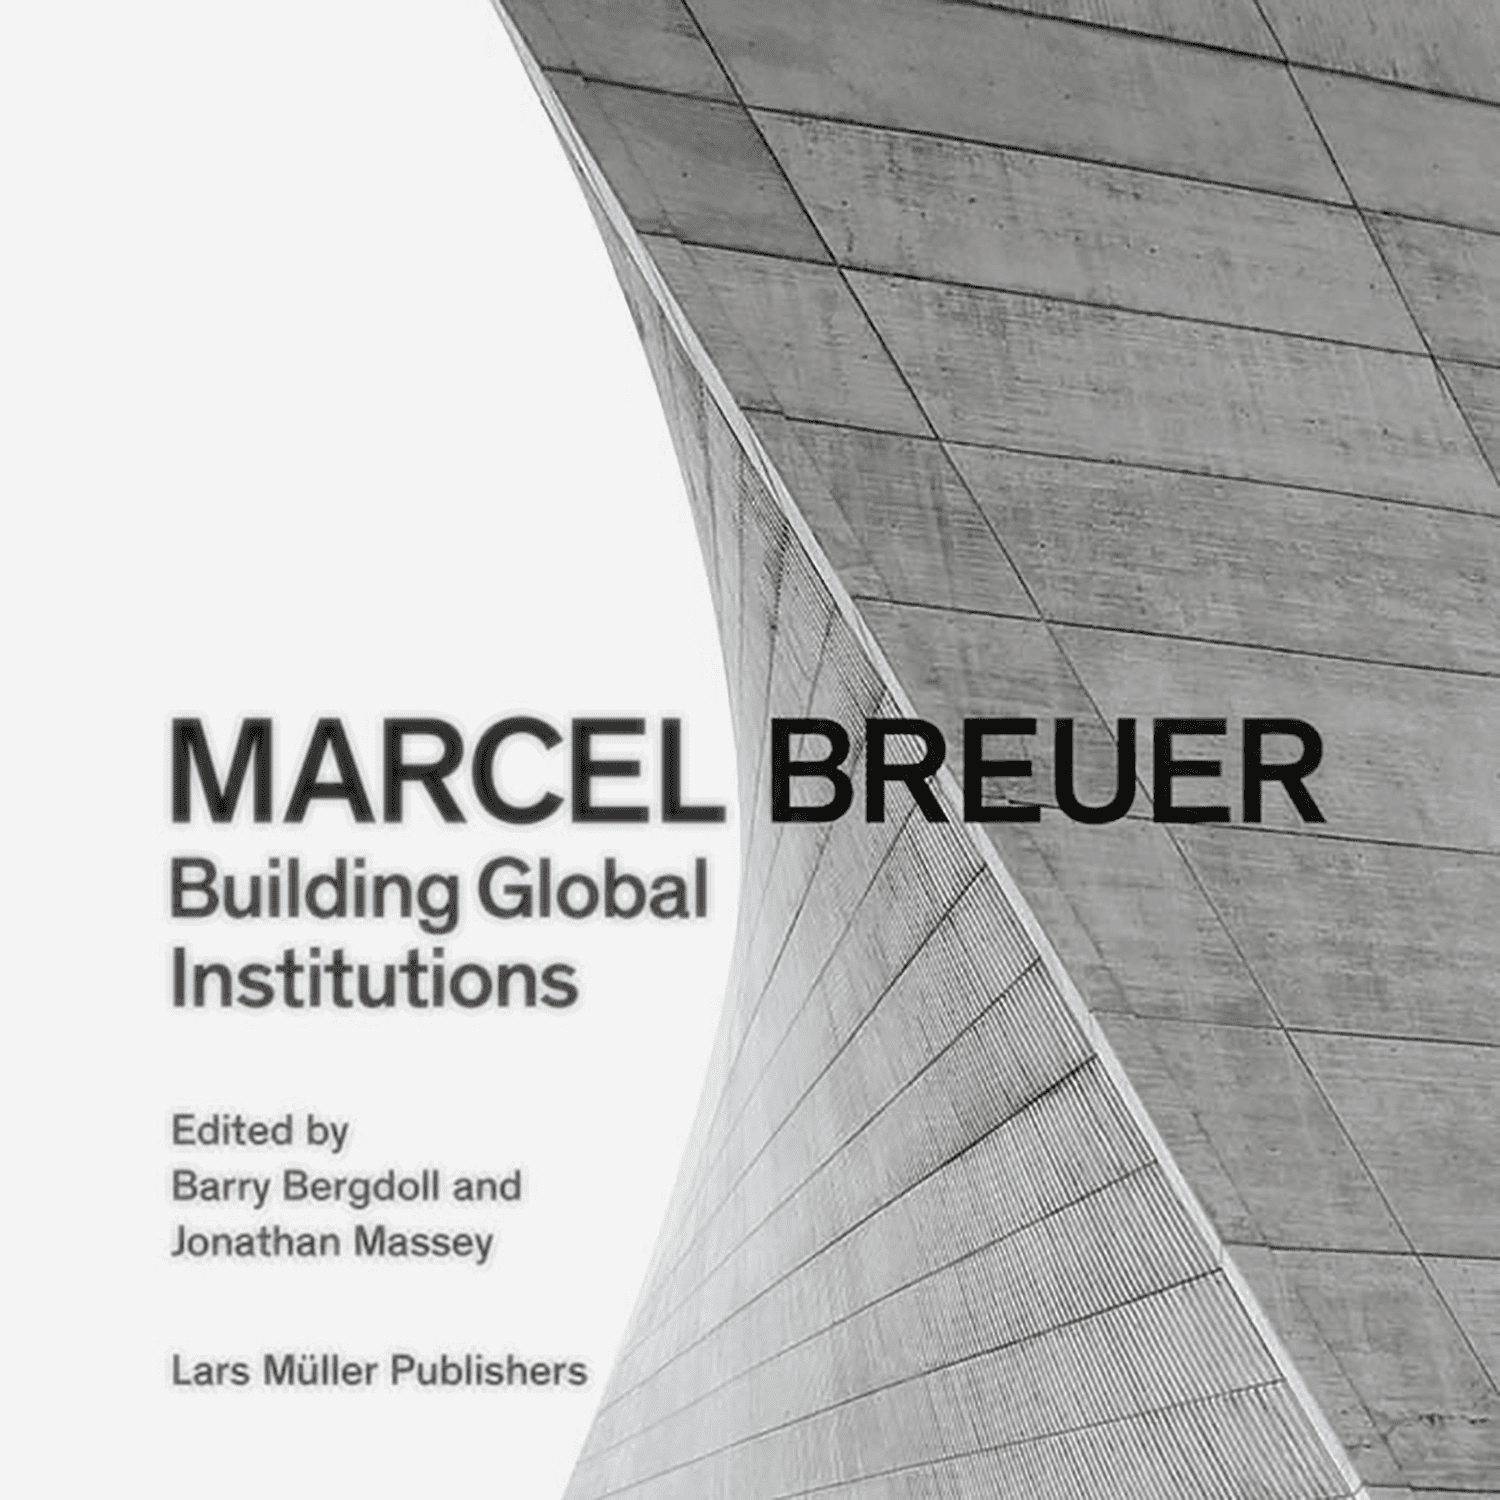 Imagen de Marcel Breuer - Construyendo Instituciones Globales